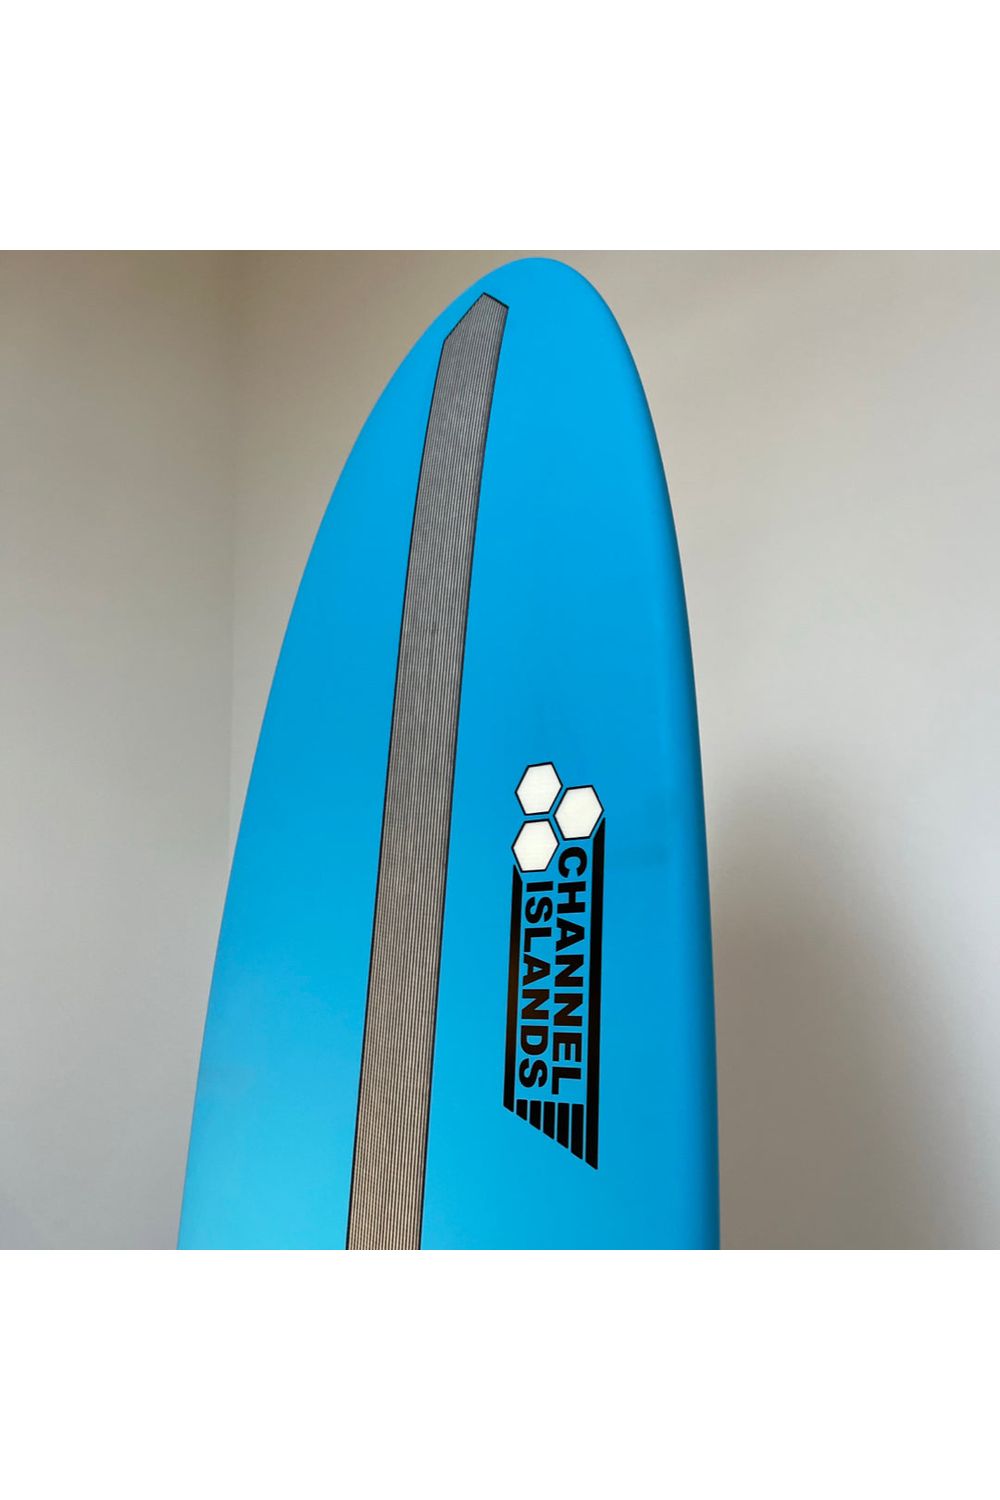 Torq Chancho X-Lite Channel Islands Blue Surfboard